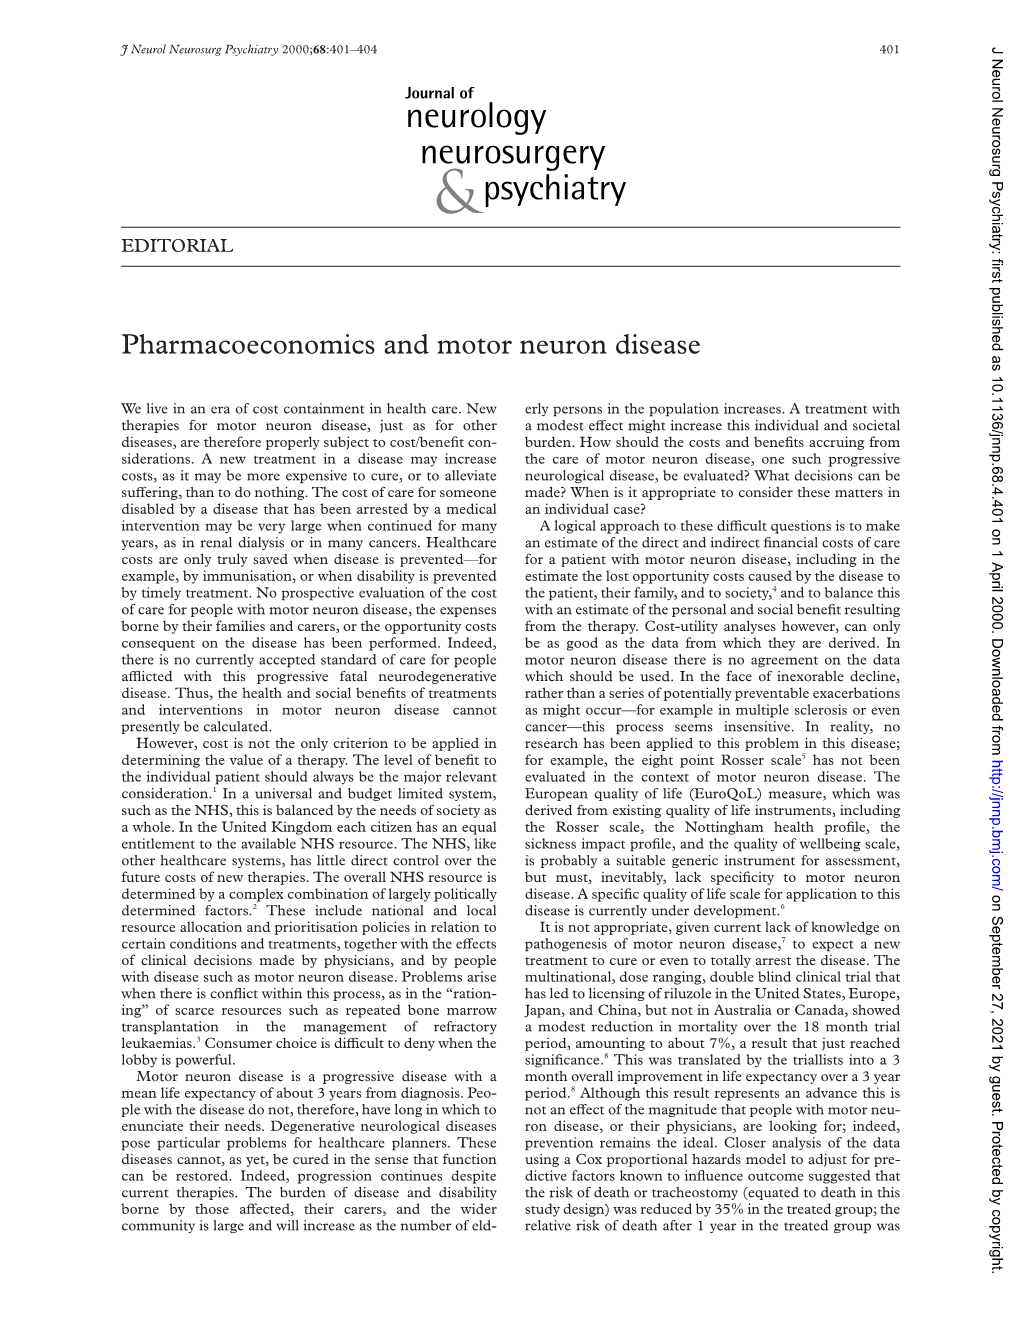 Pharmacoeconomics and Motor Neuron Disease